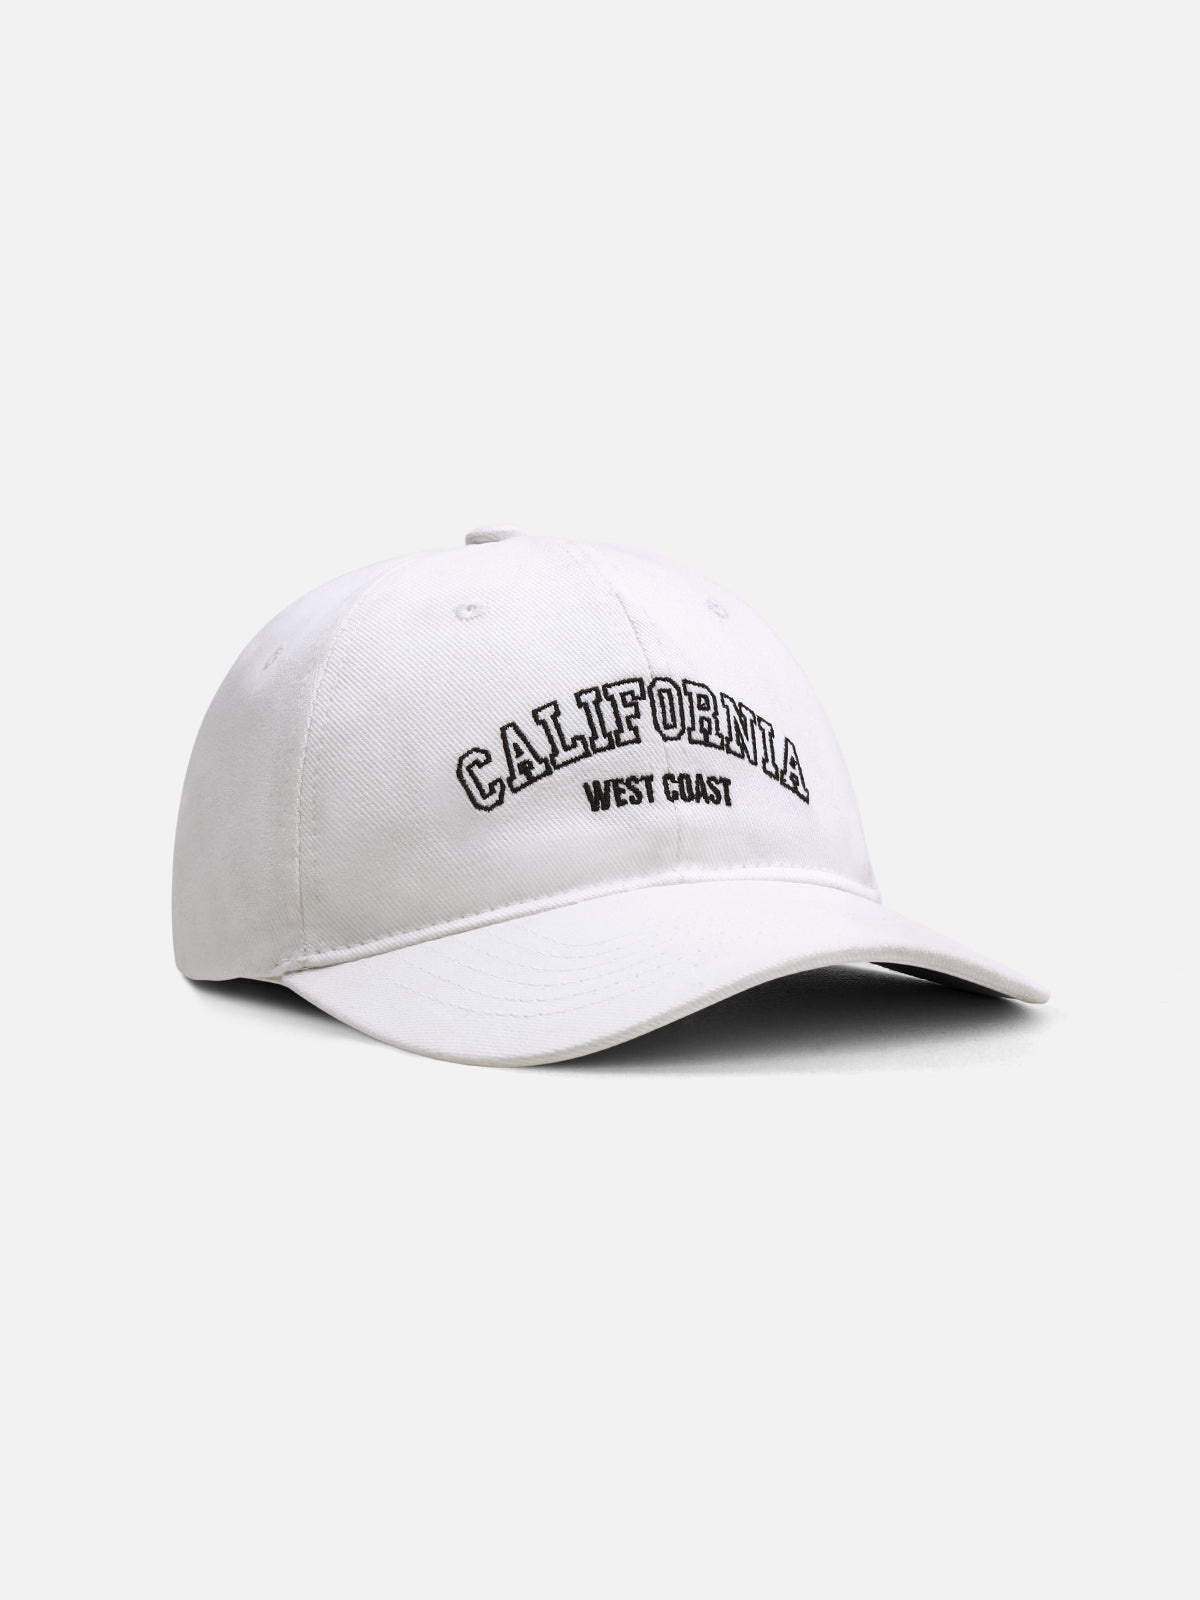 White Baseball Cap - FWAC23-006